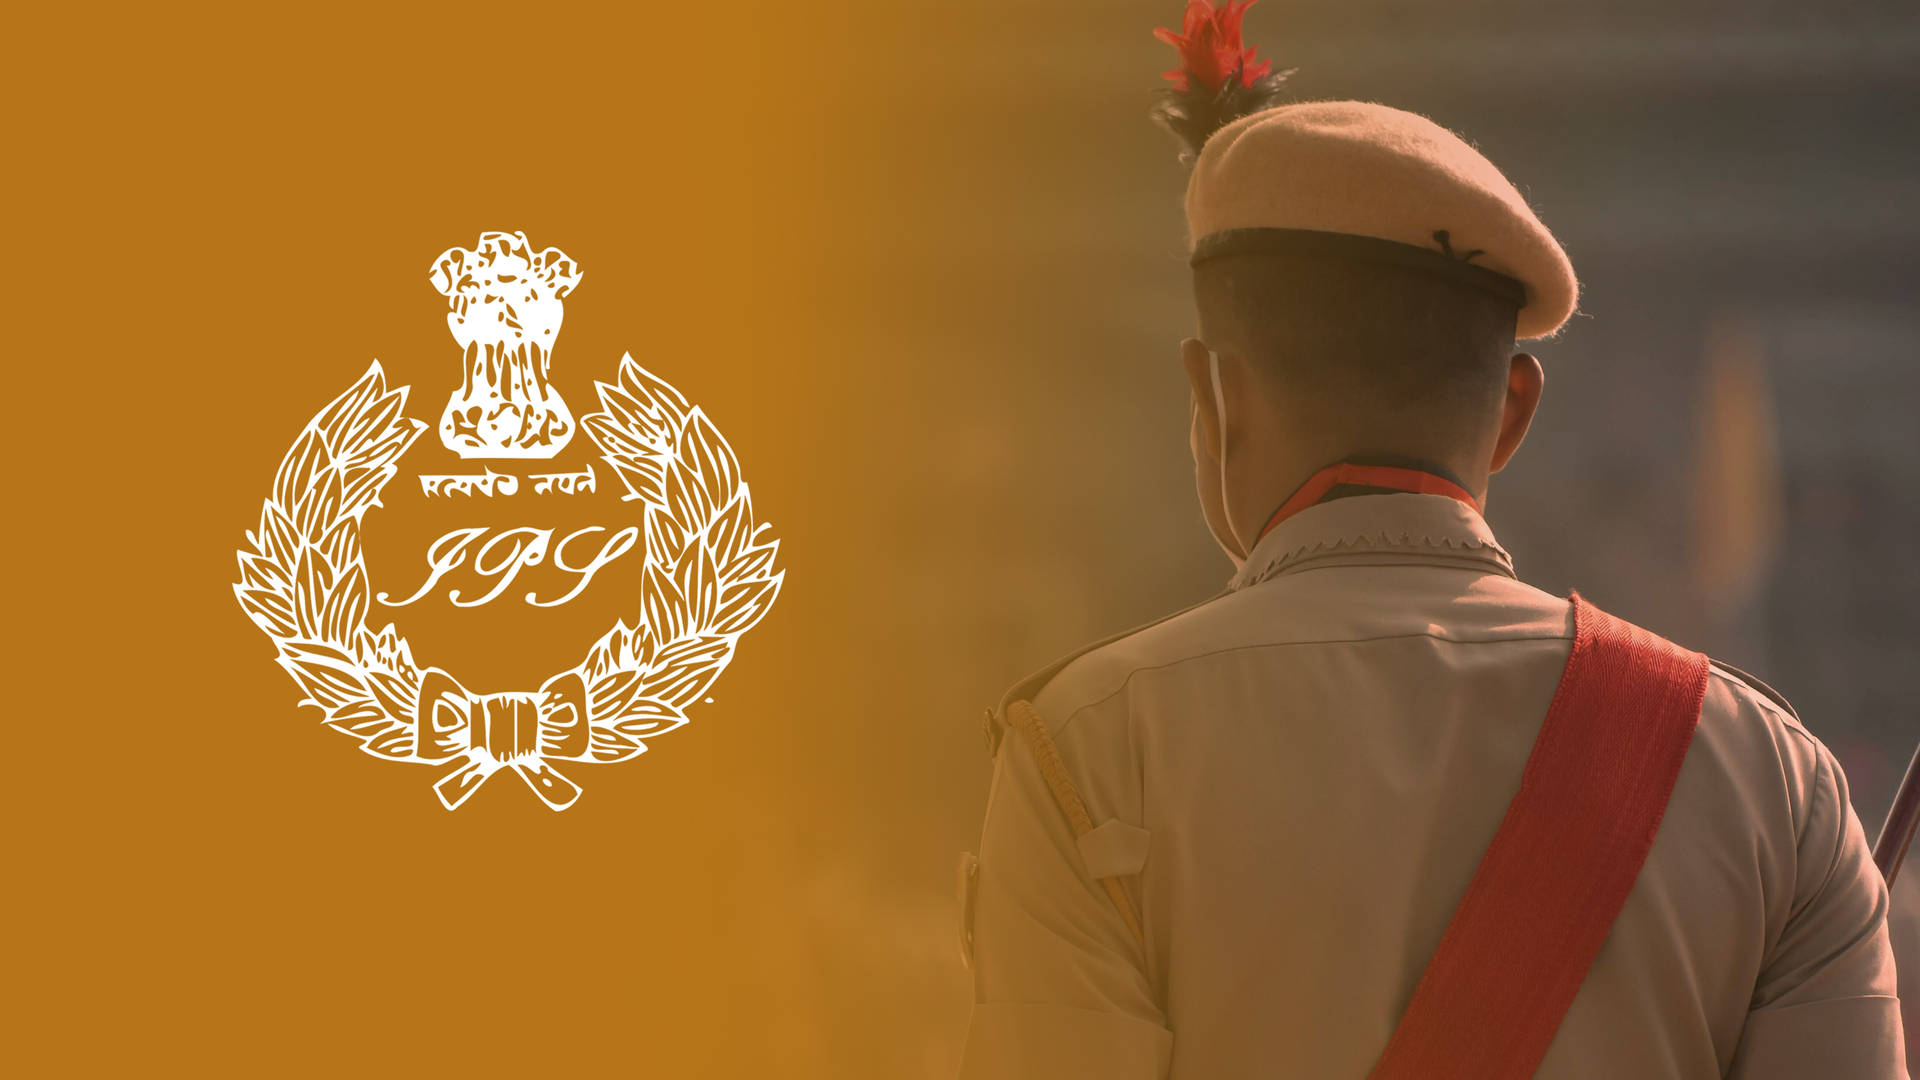 Download Ips Logo Indian Police Wallpaper 